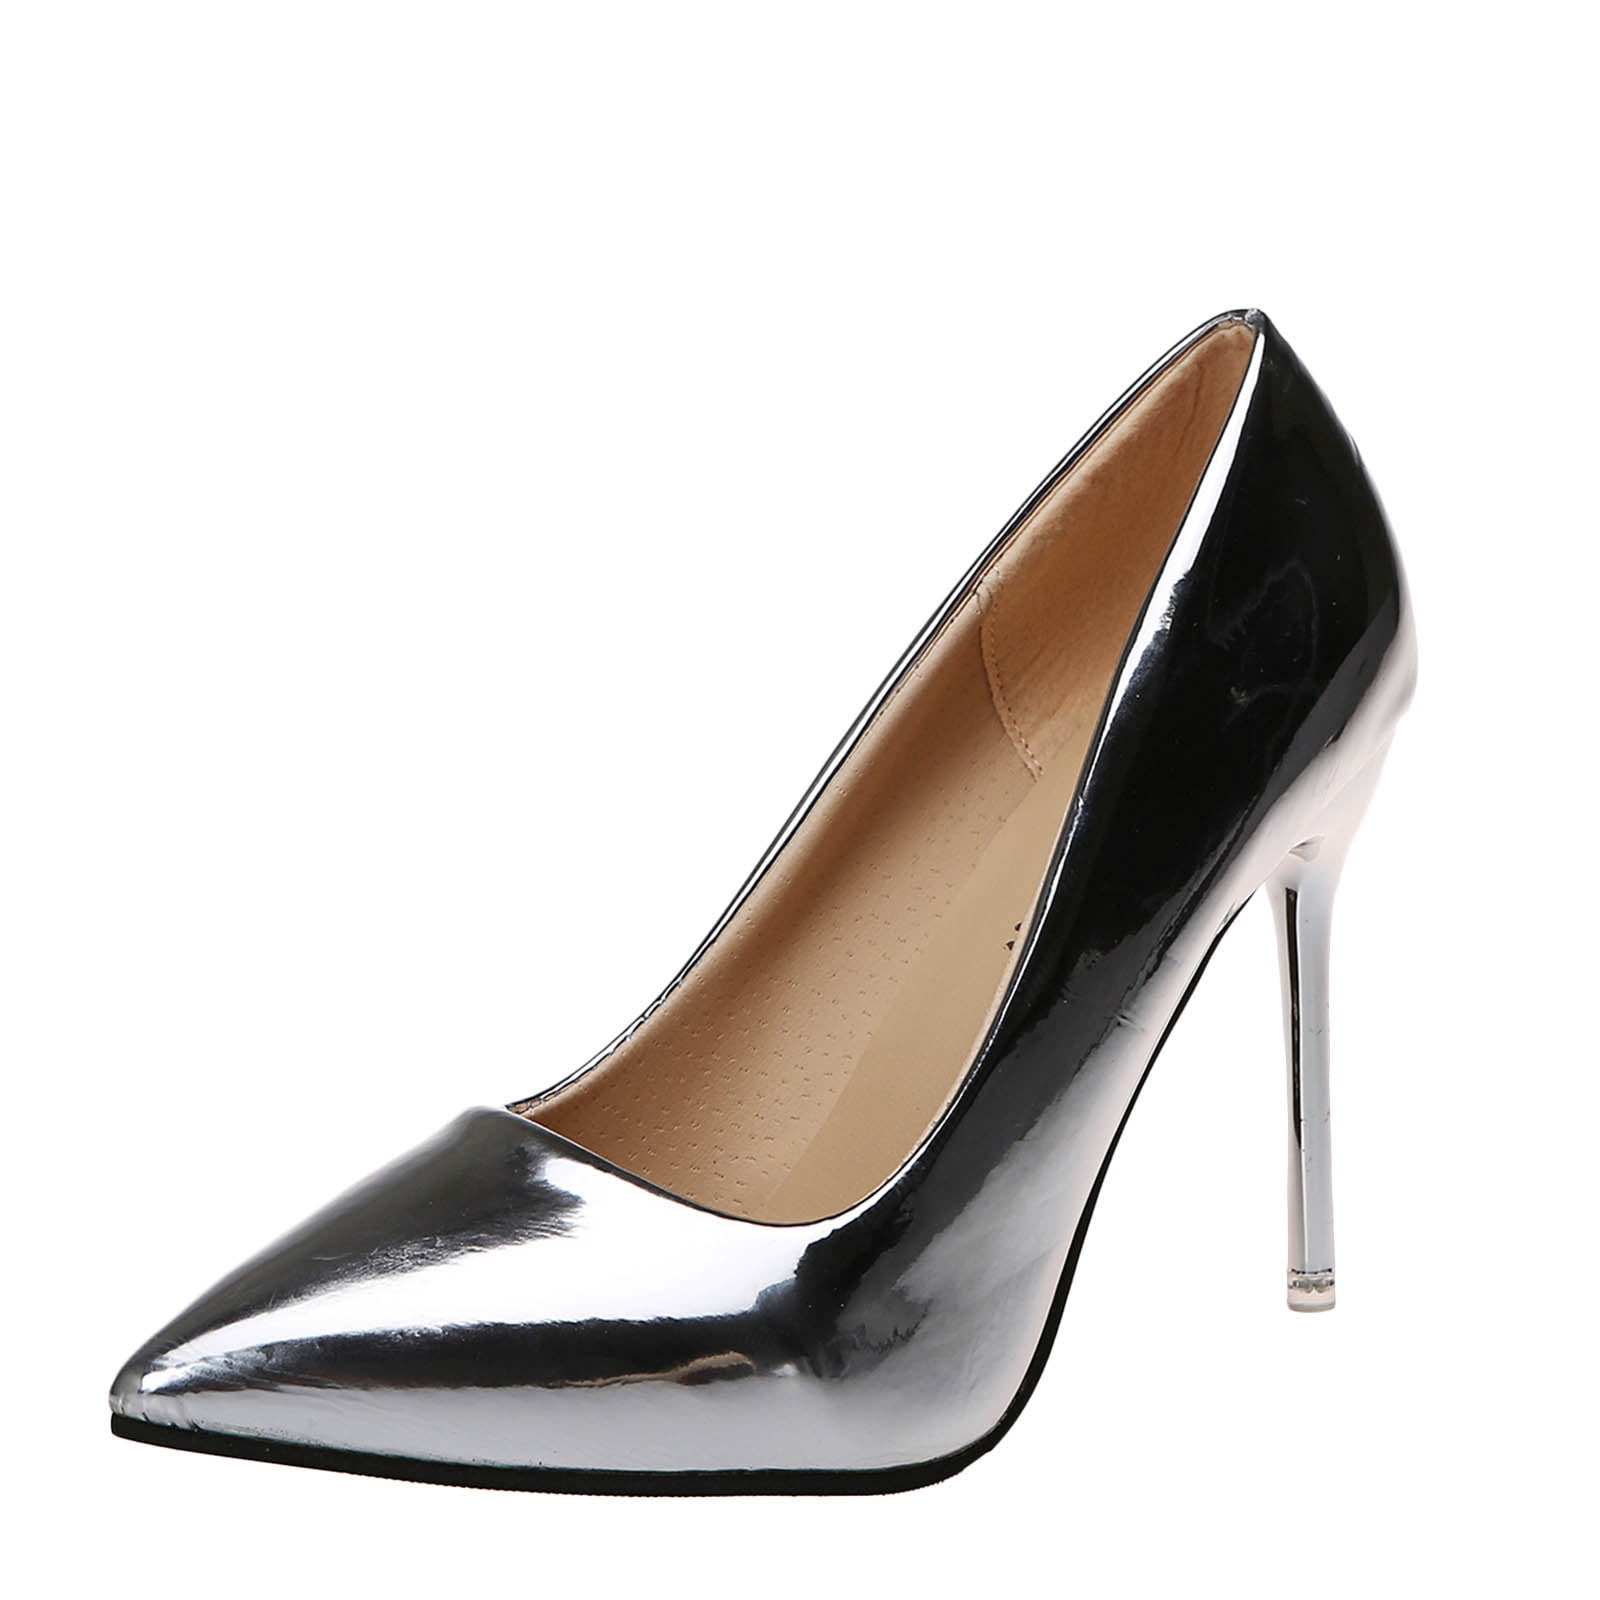 Designer Heels: Luxury leather Pumps for Women | Bally